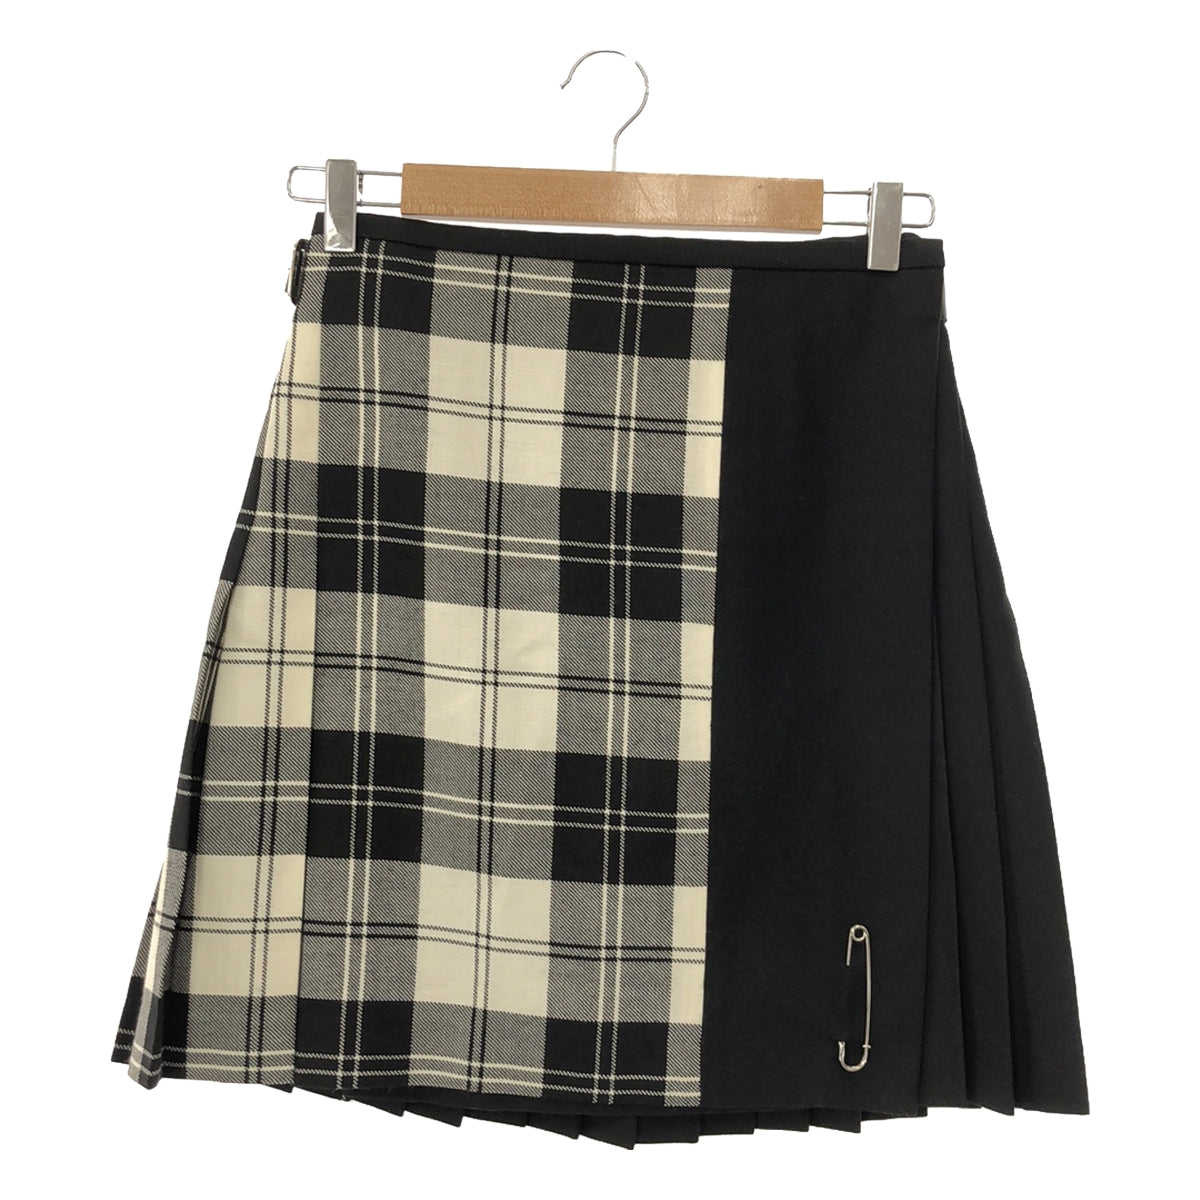 le kilt チェック プリーツスカート 巻きスカートとても可愛いです 